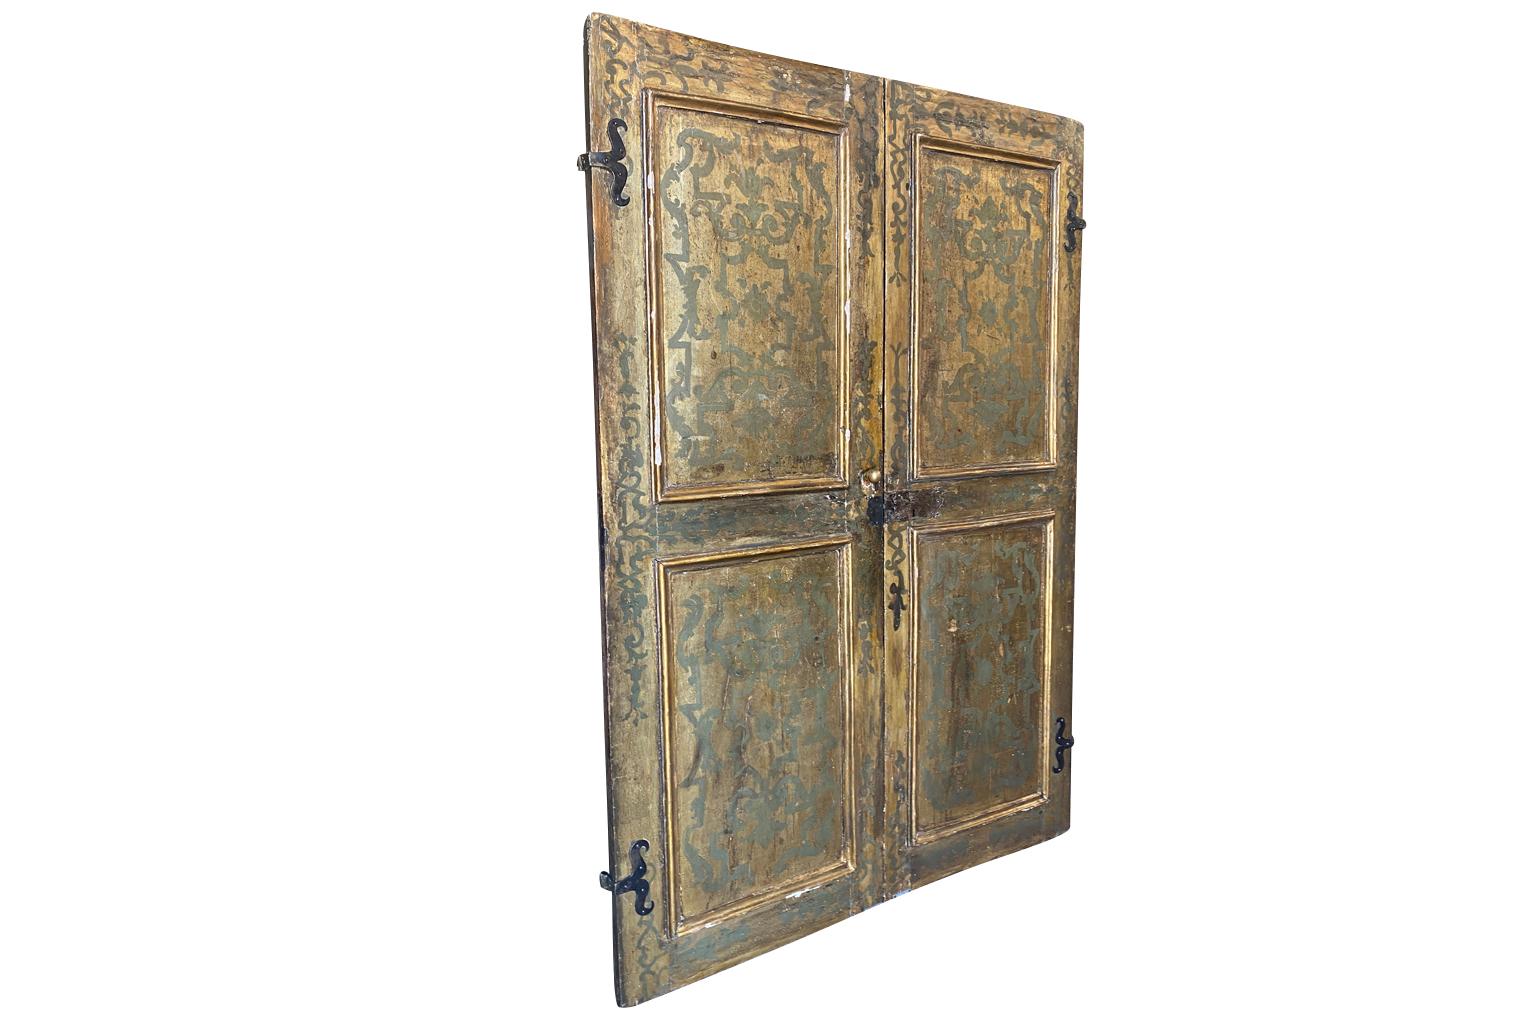 Exceptional 17th Century Italian Pair of Doors In Good Condition For Sale In Atlanta, GA